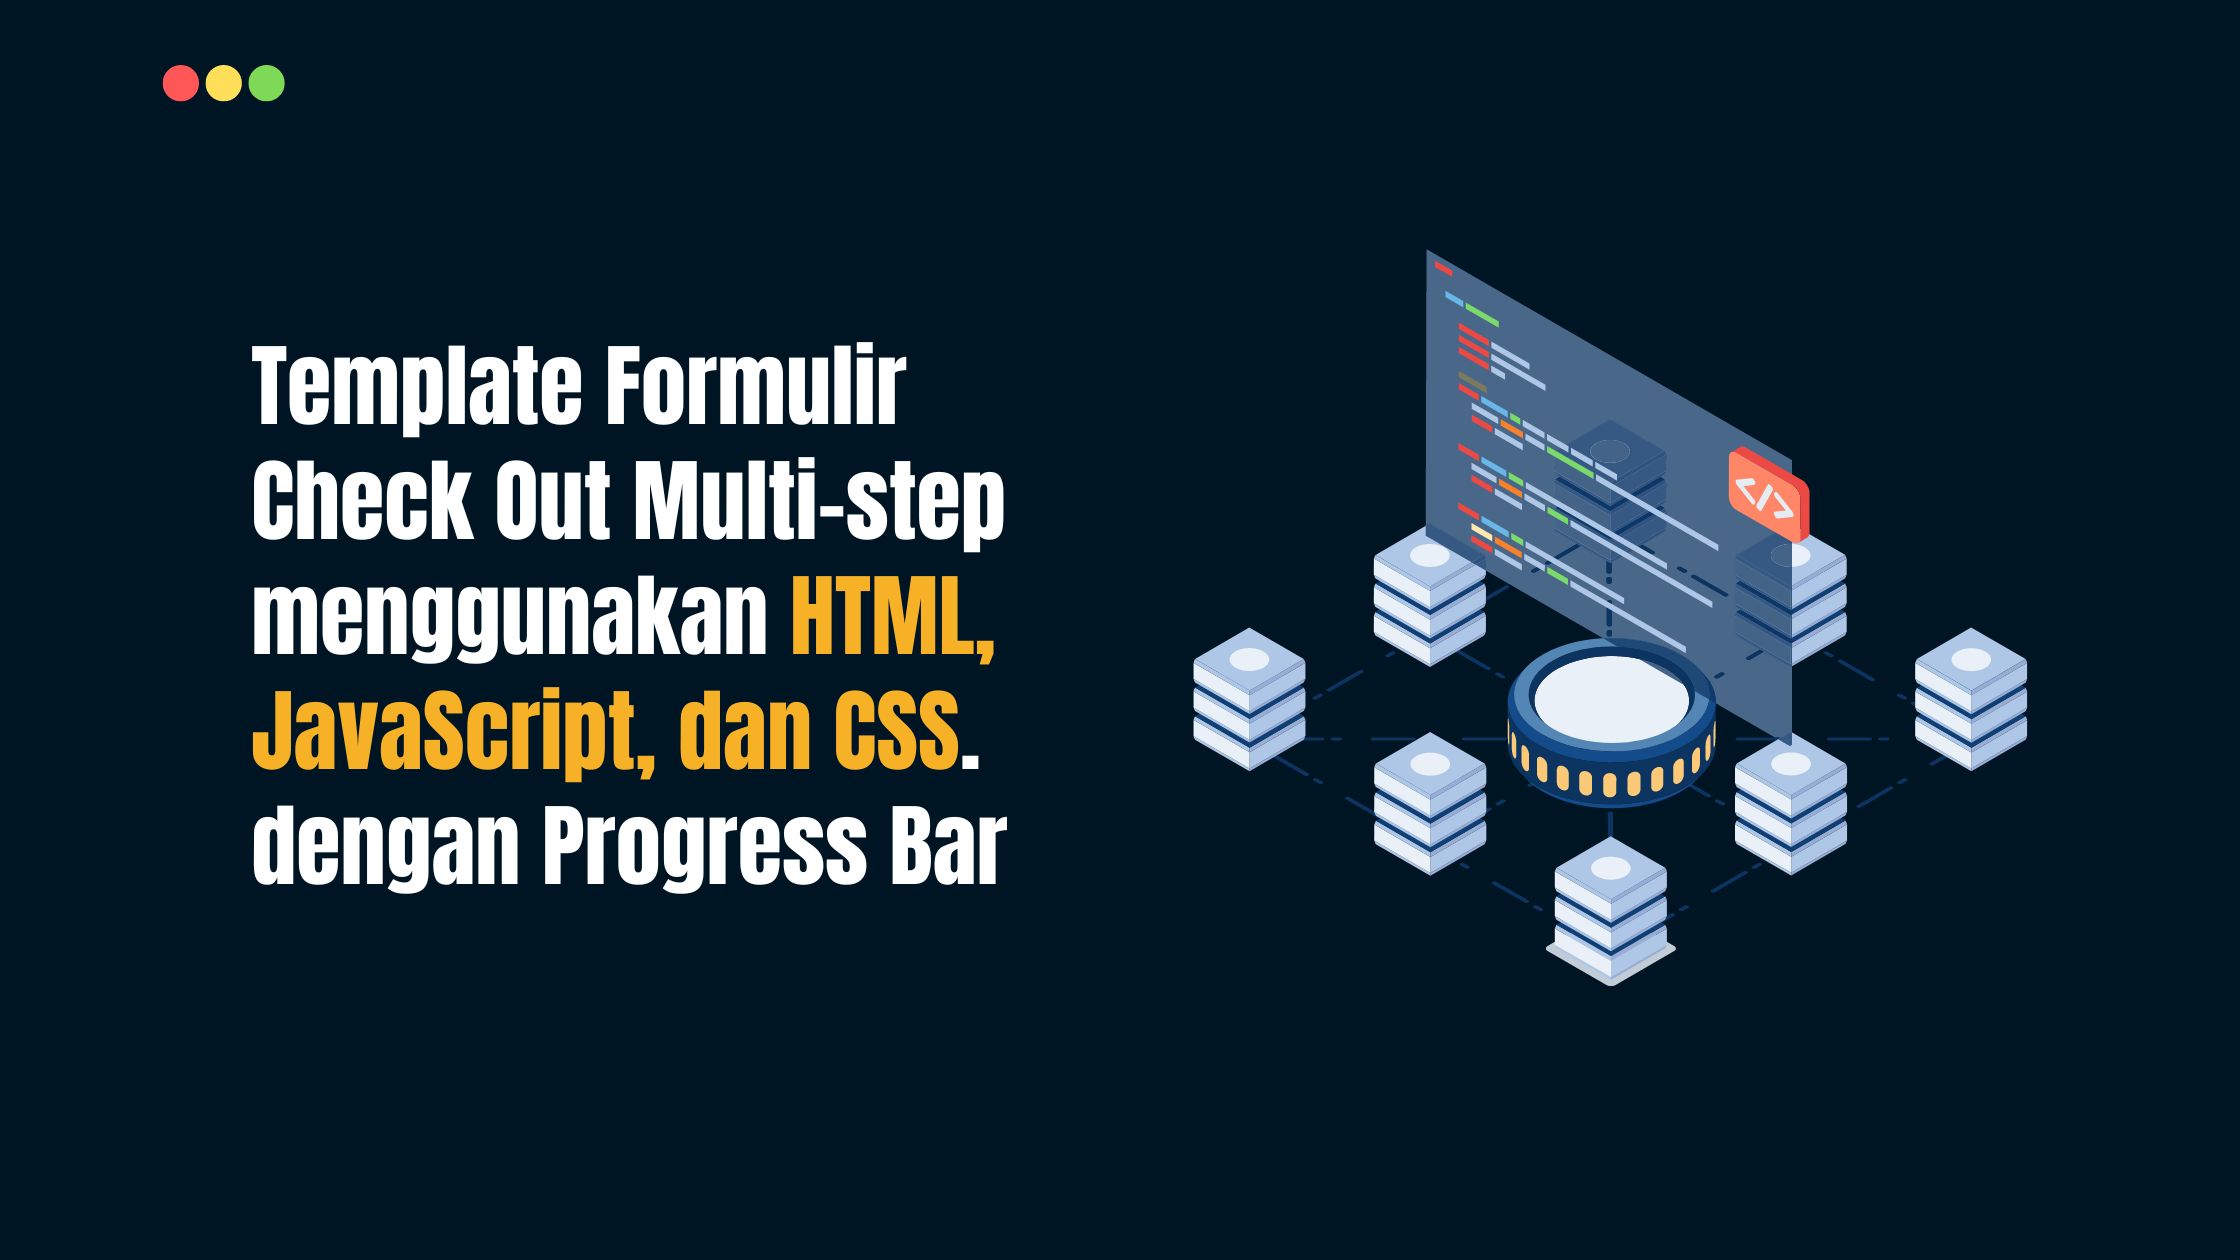 Form Check Out Multi-step menggunakan HTML, JavaScript, dan CSS dengan Progress Bar [Free Dowload]